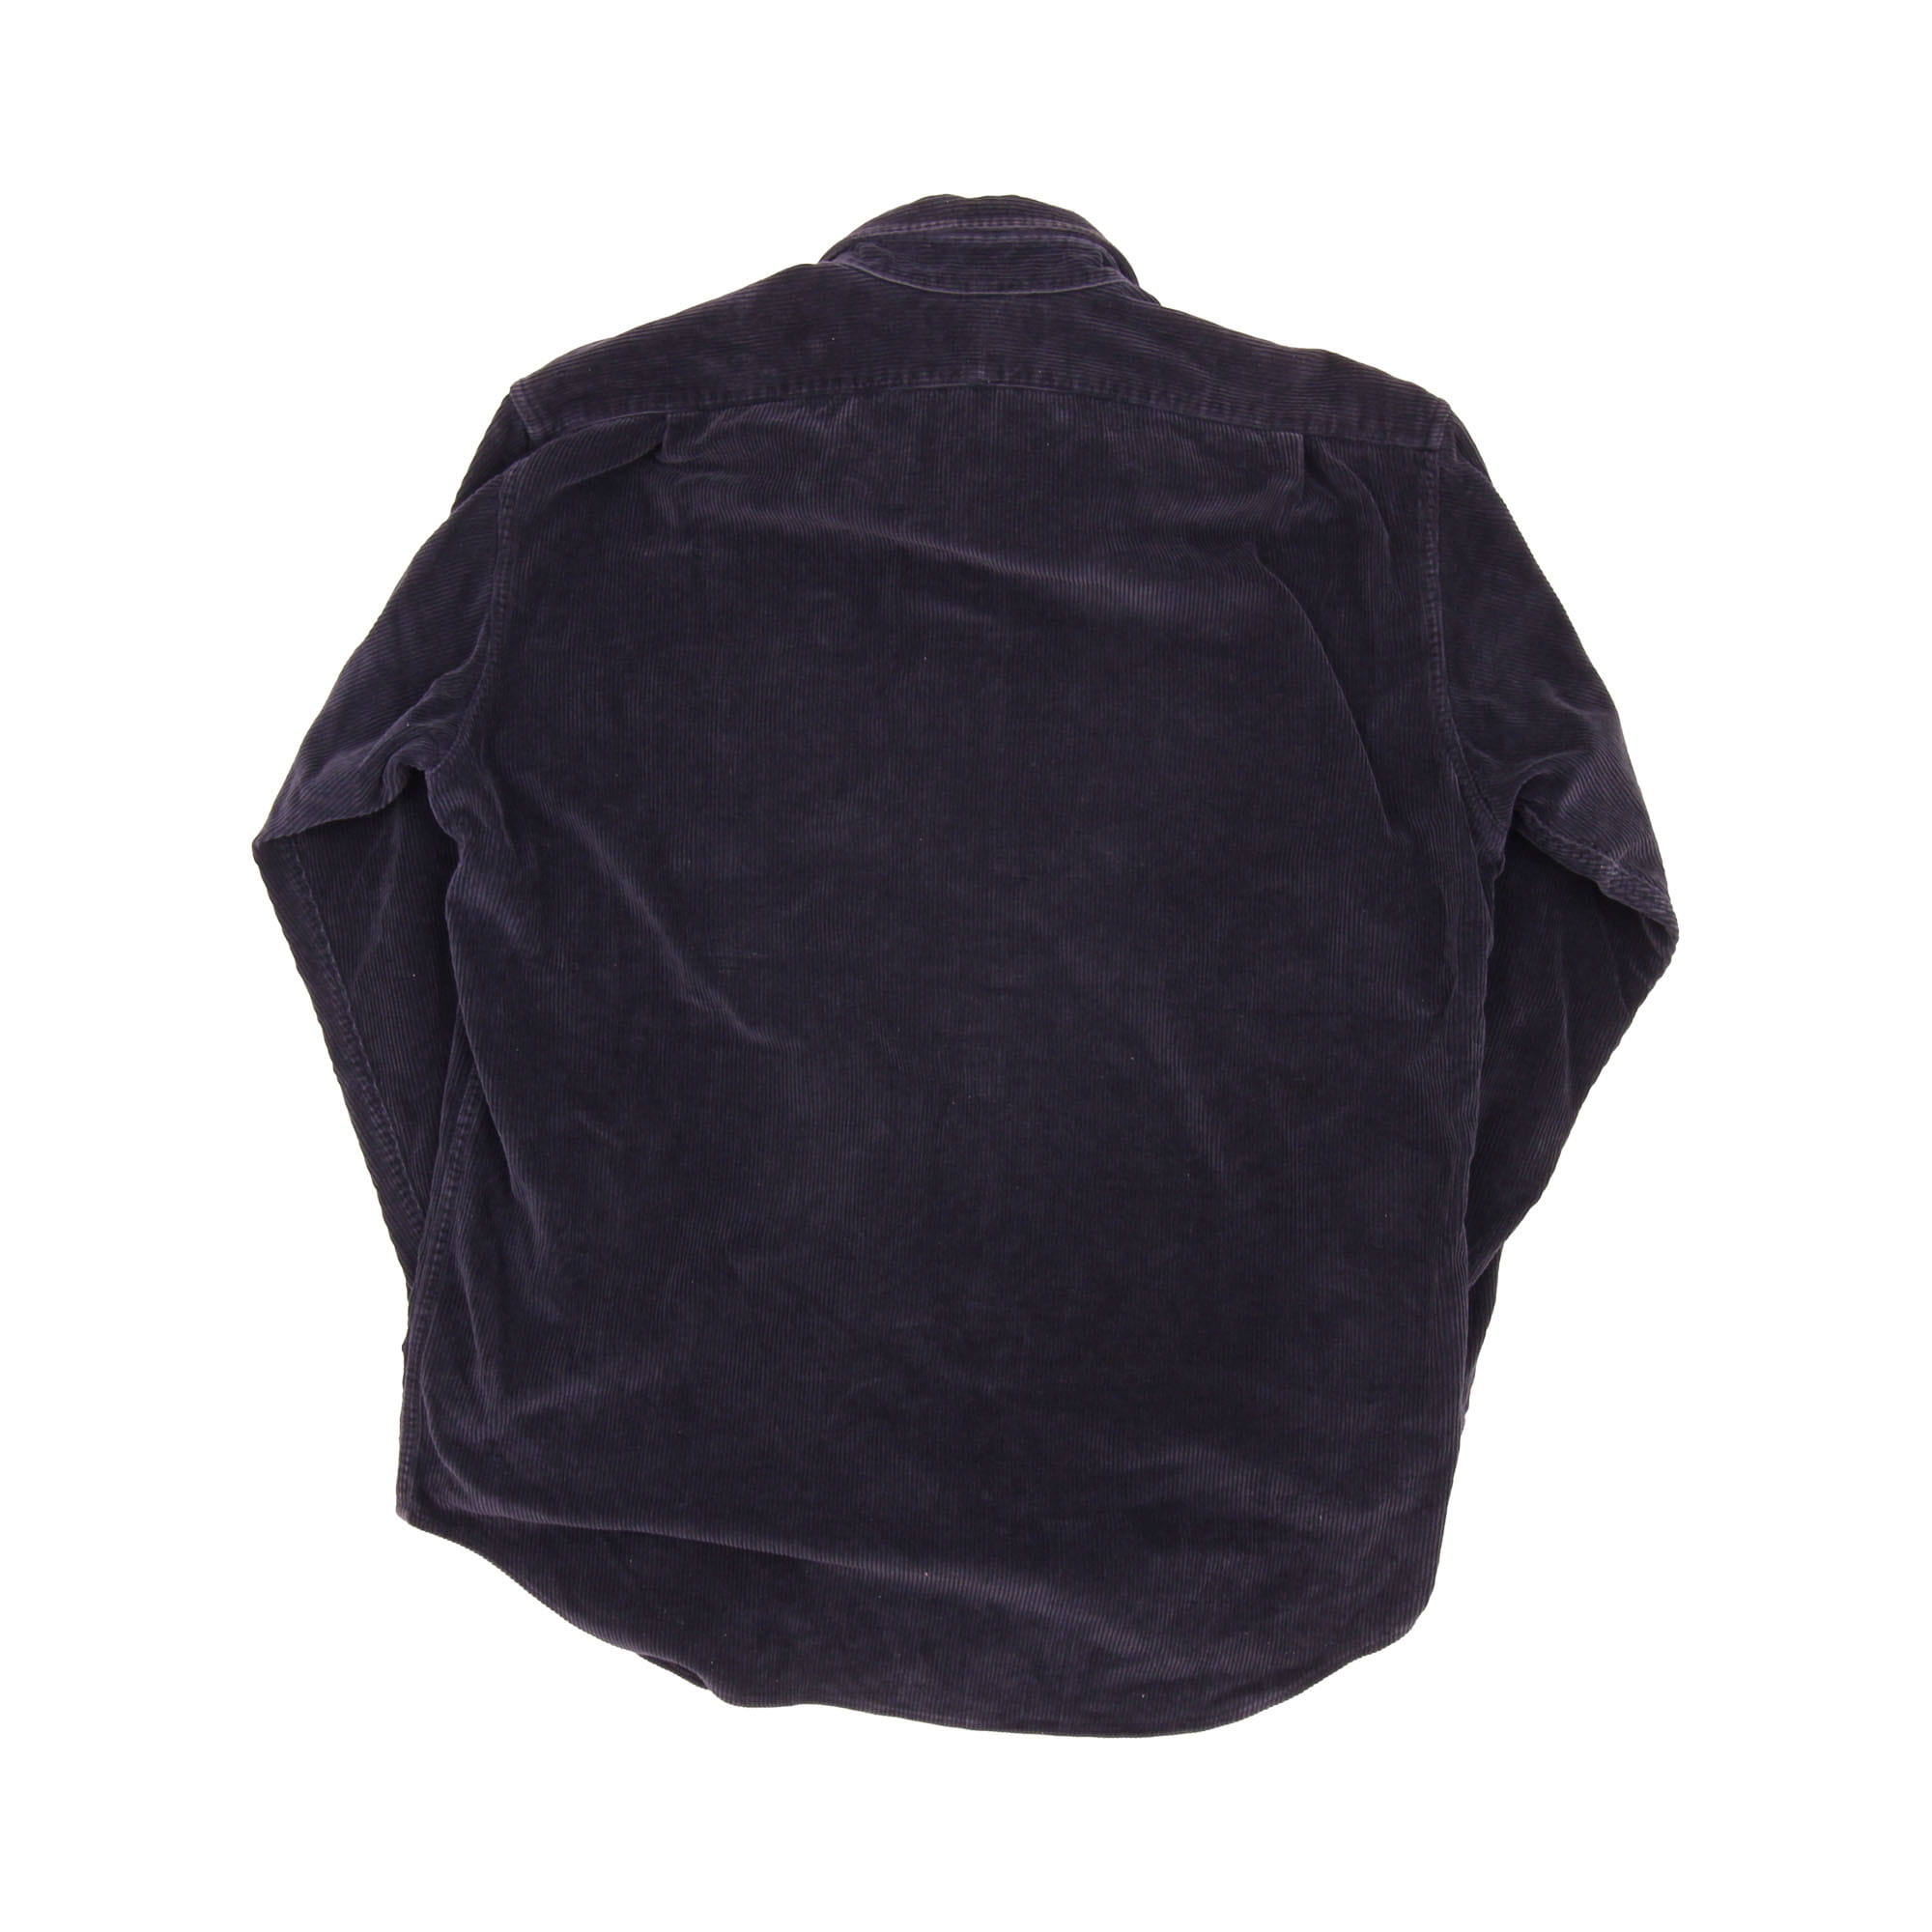 Polo Ralph Lauren Cord Shirt Black - XL 